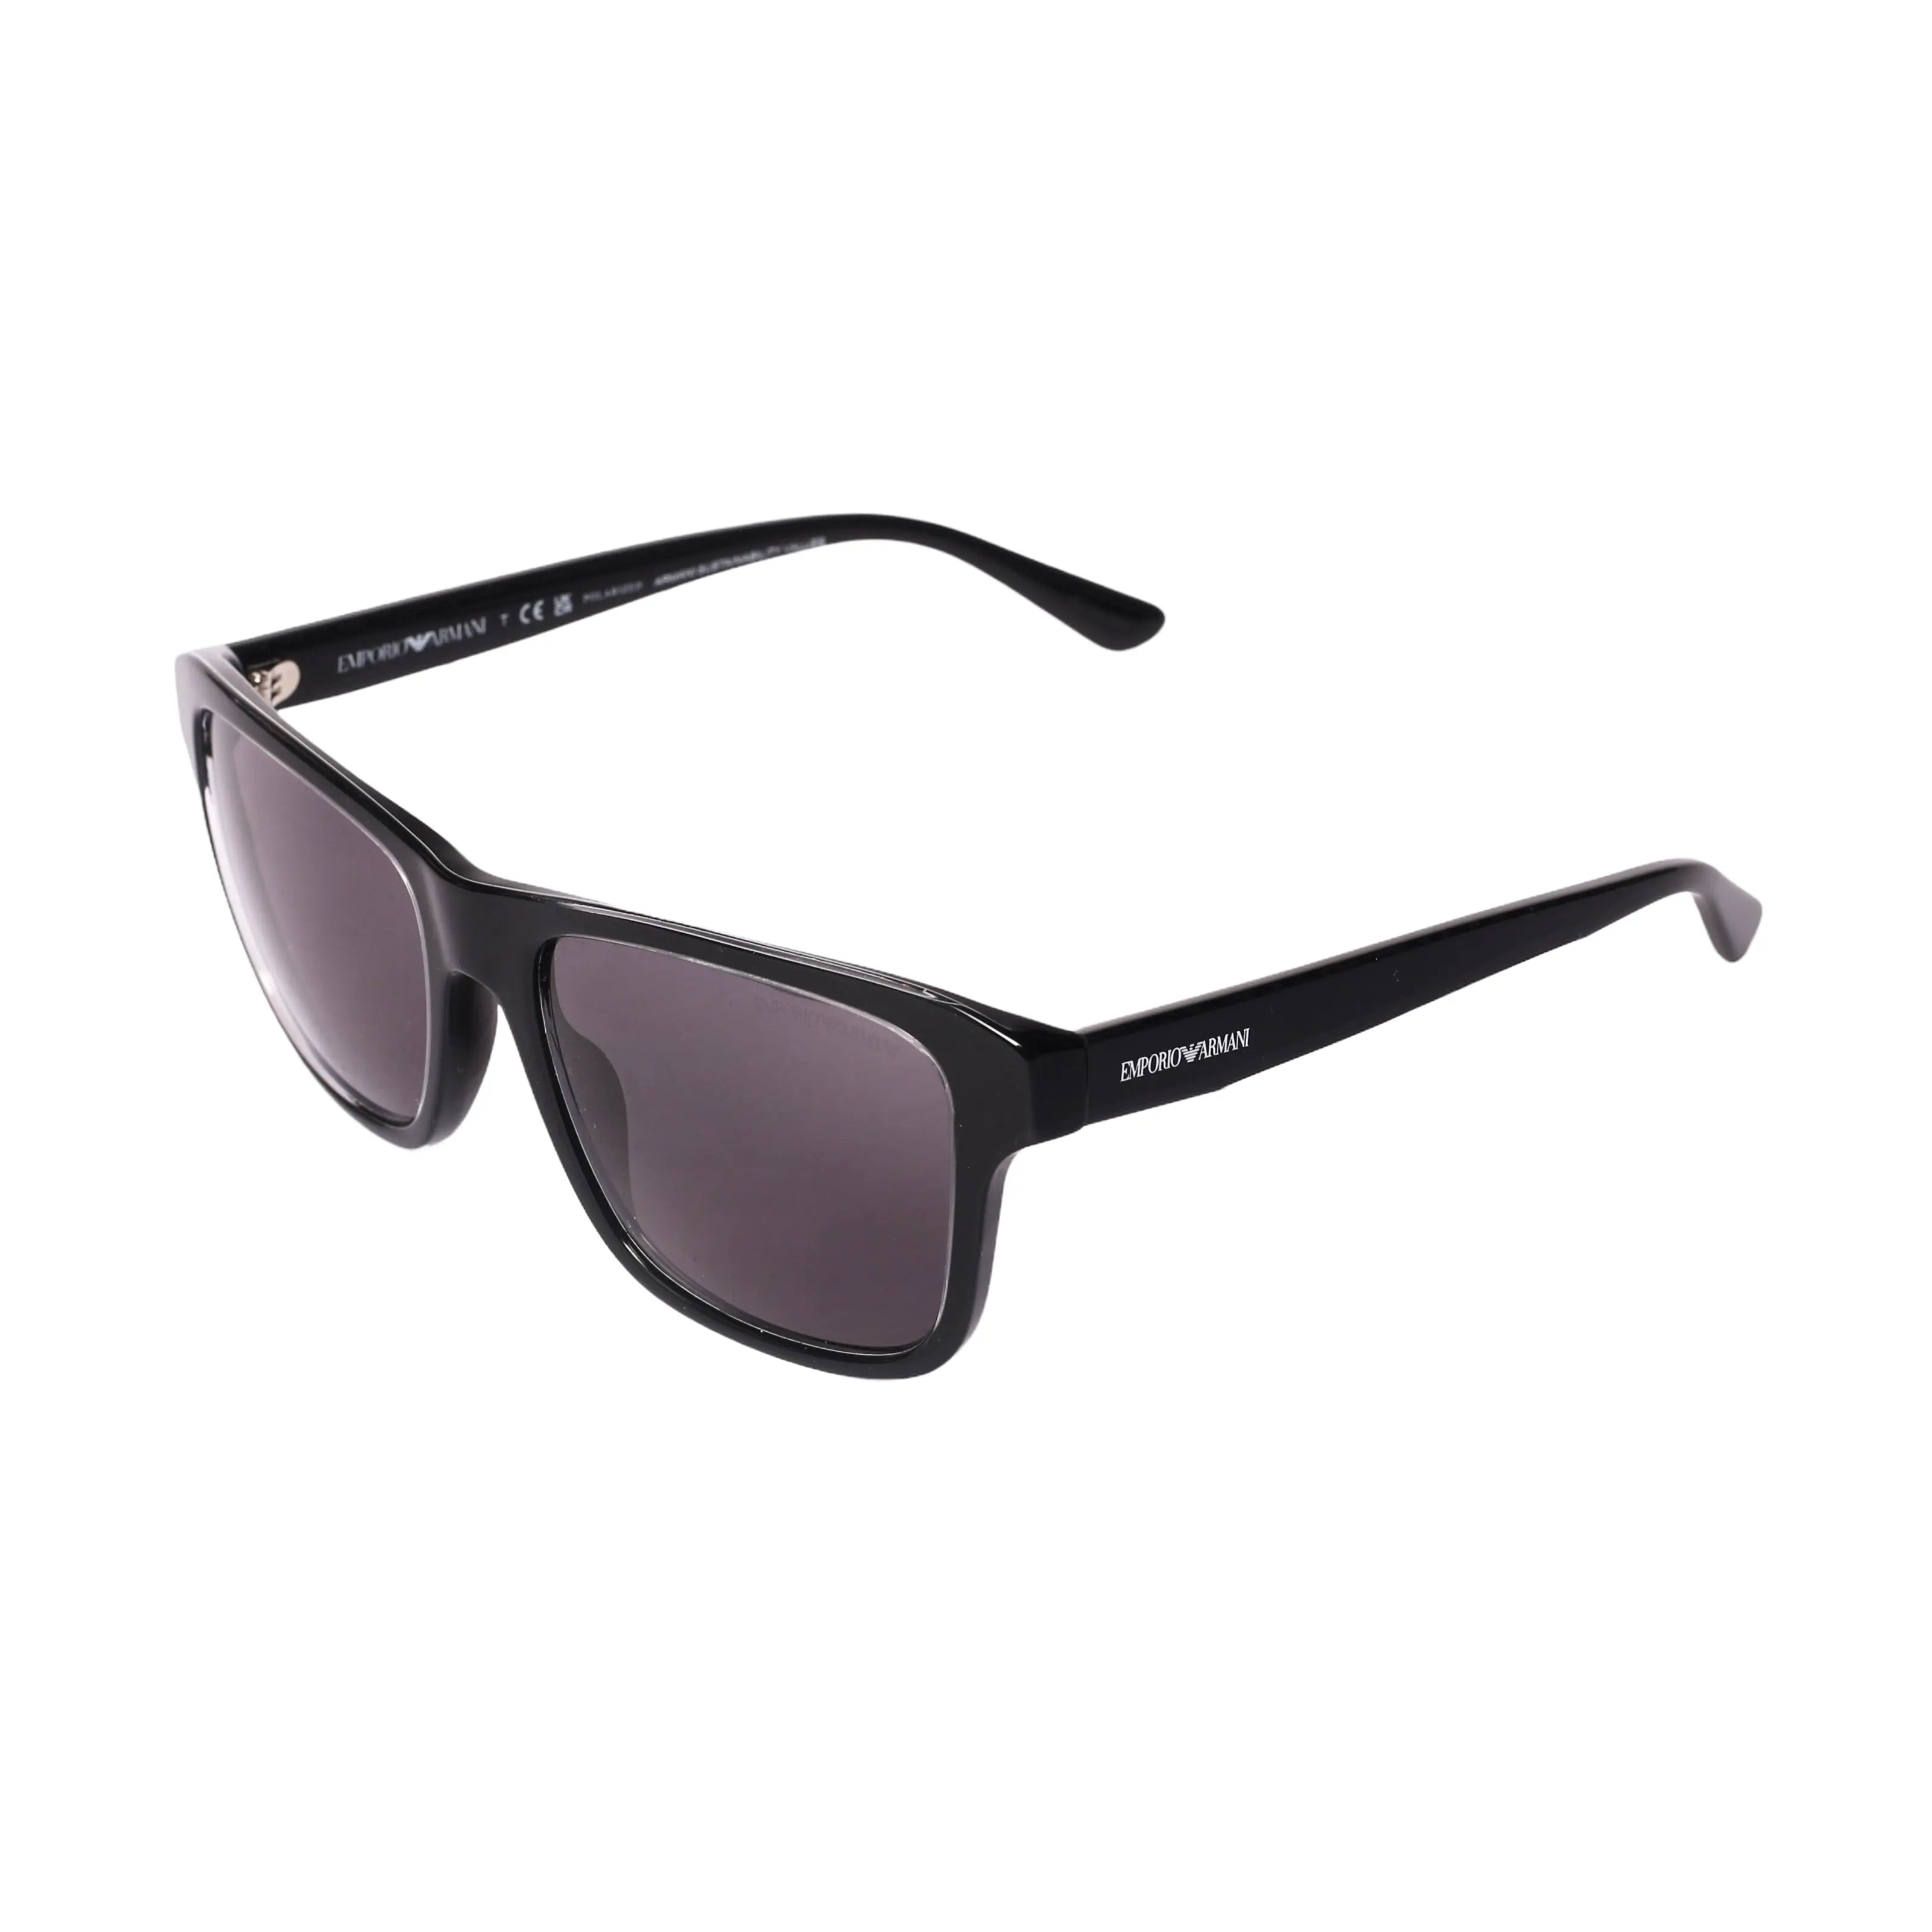 Emporio Armani-EA 4208-56-6051 Sunglasses - Premium Sunglasses from Emporio Armani - Just Rs. 15290! Shop now at Laxmi Opticians